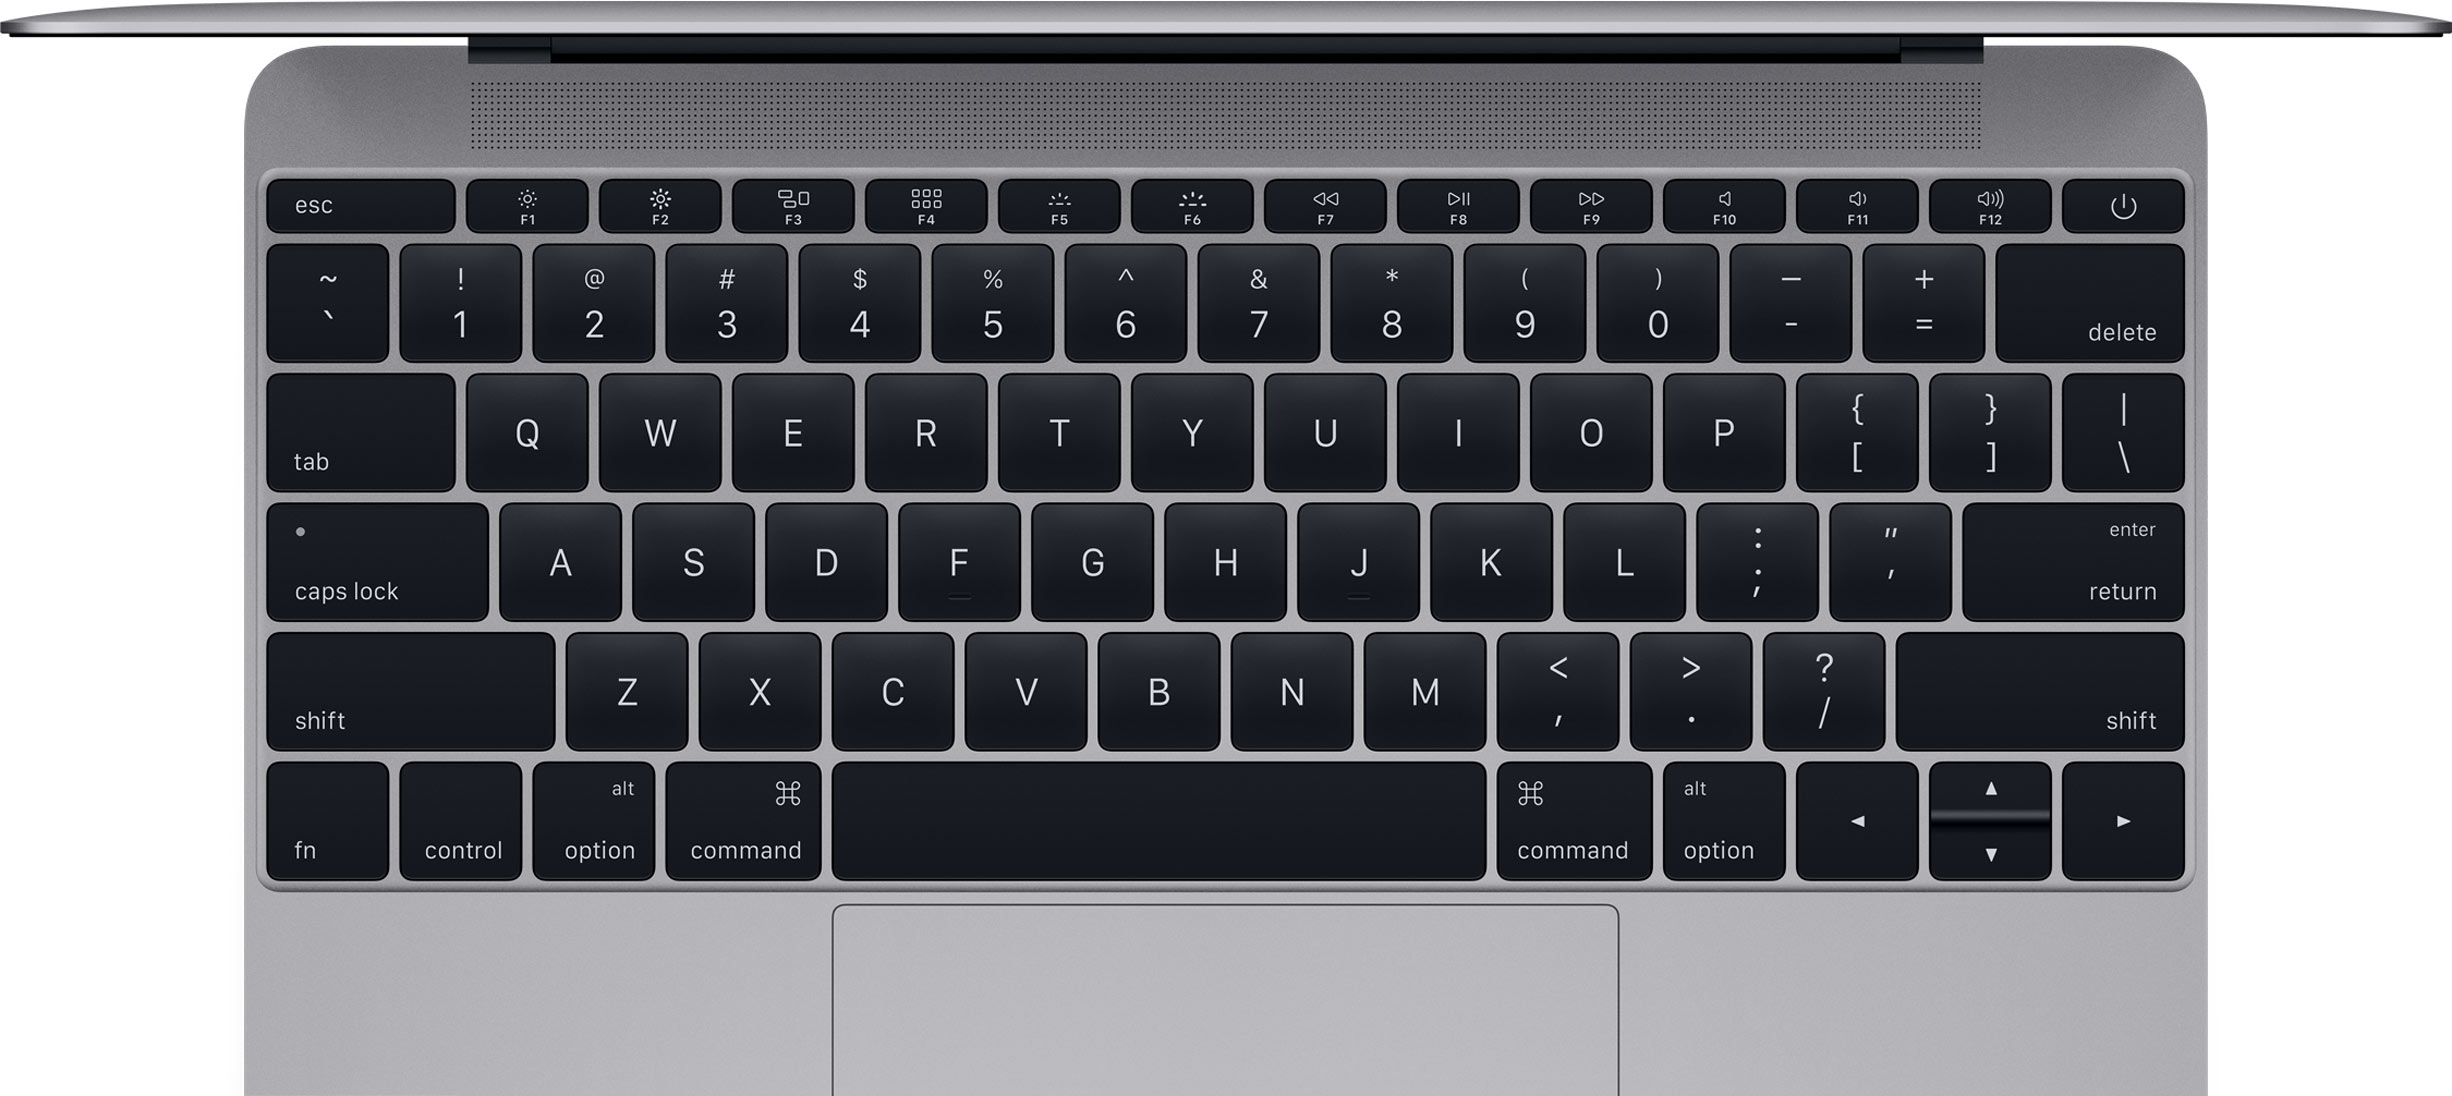 keyboard cleaner macbook pro